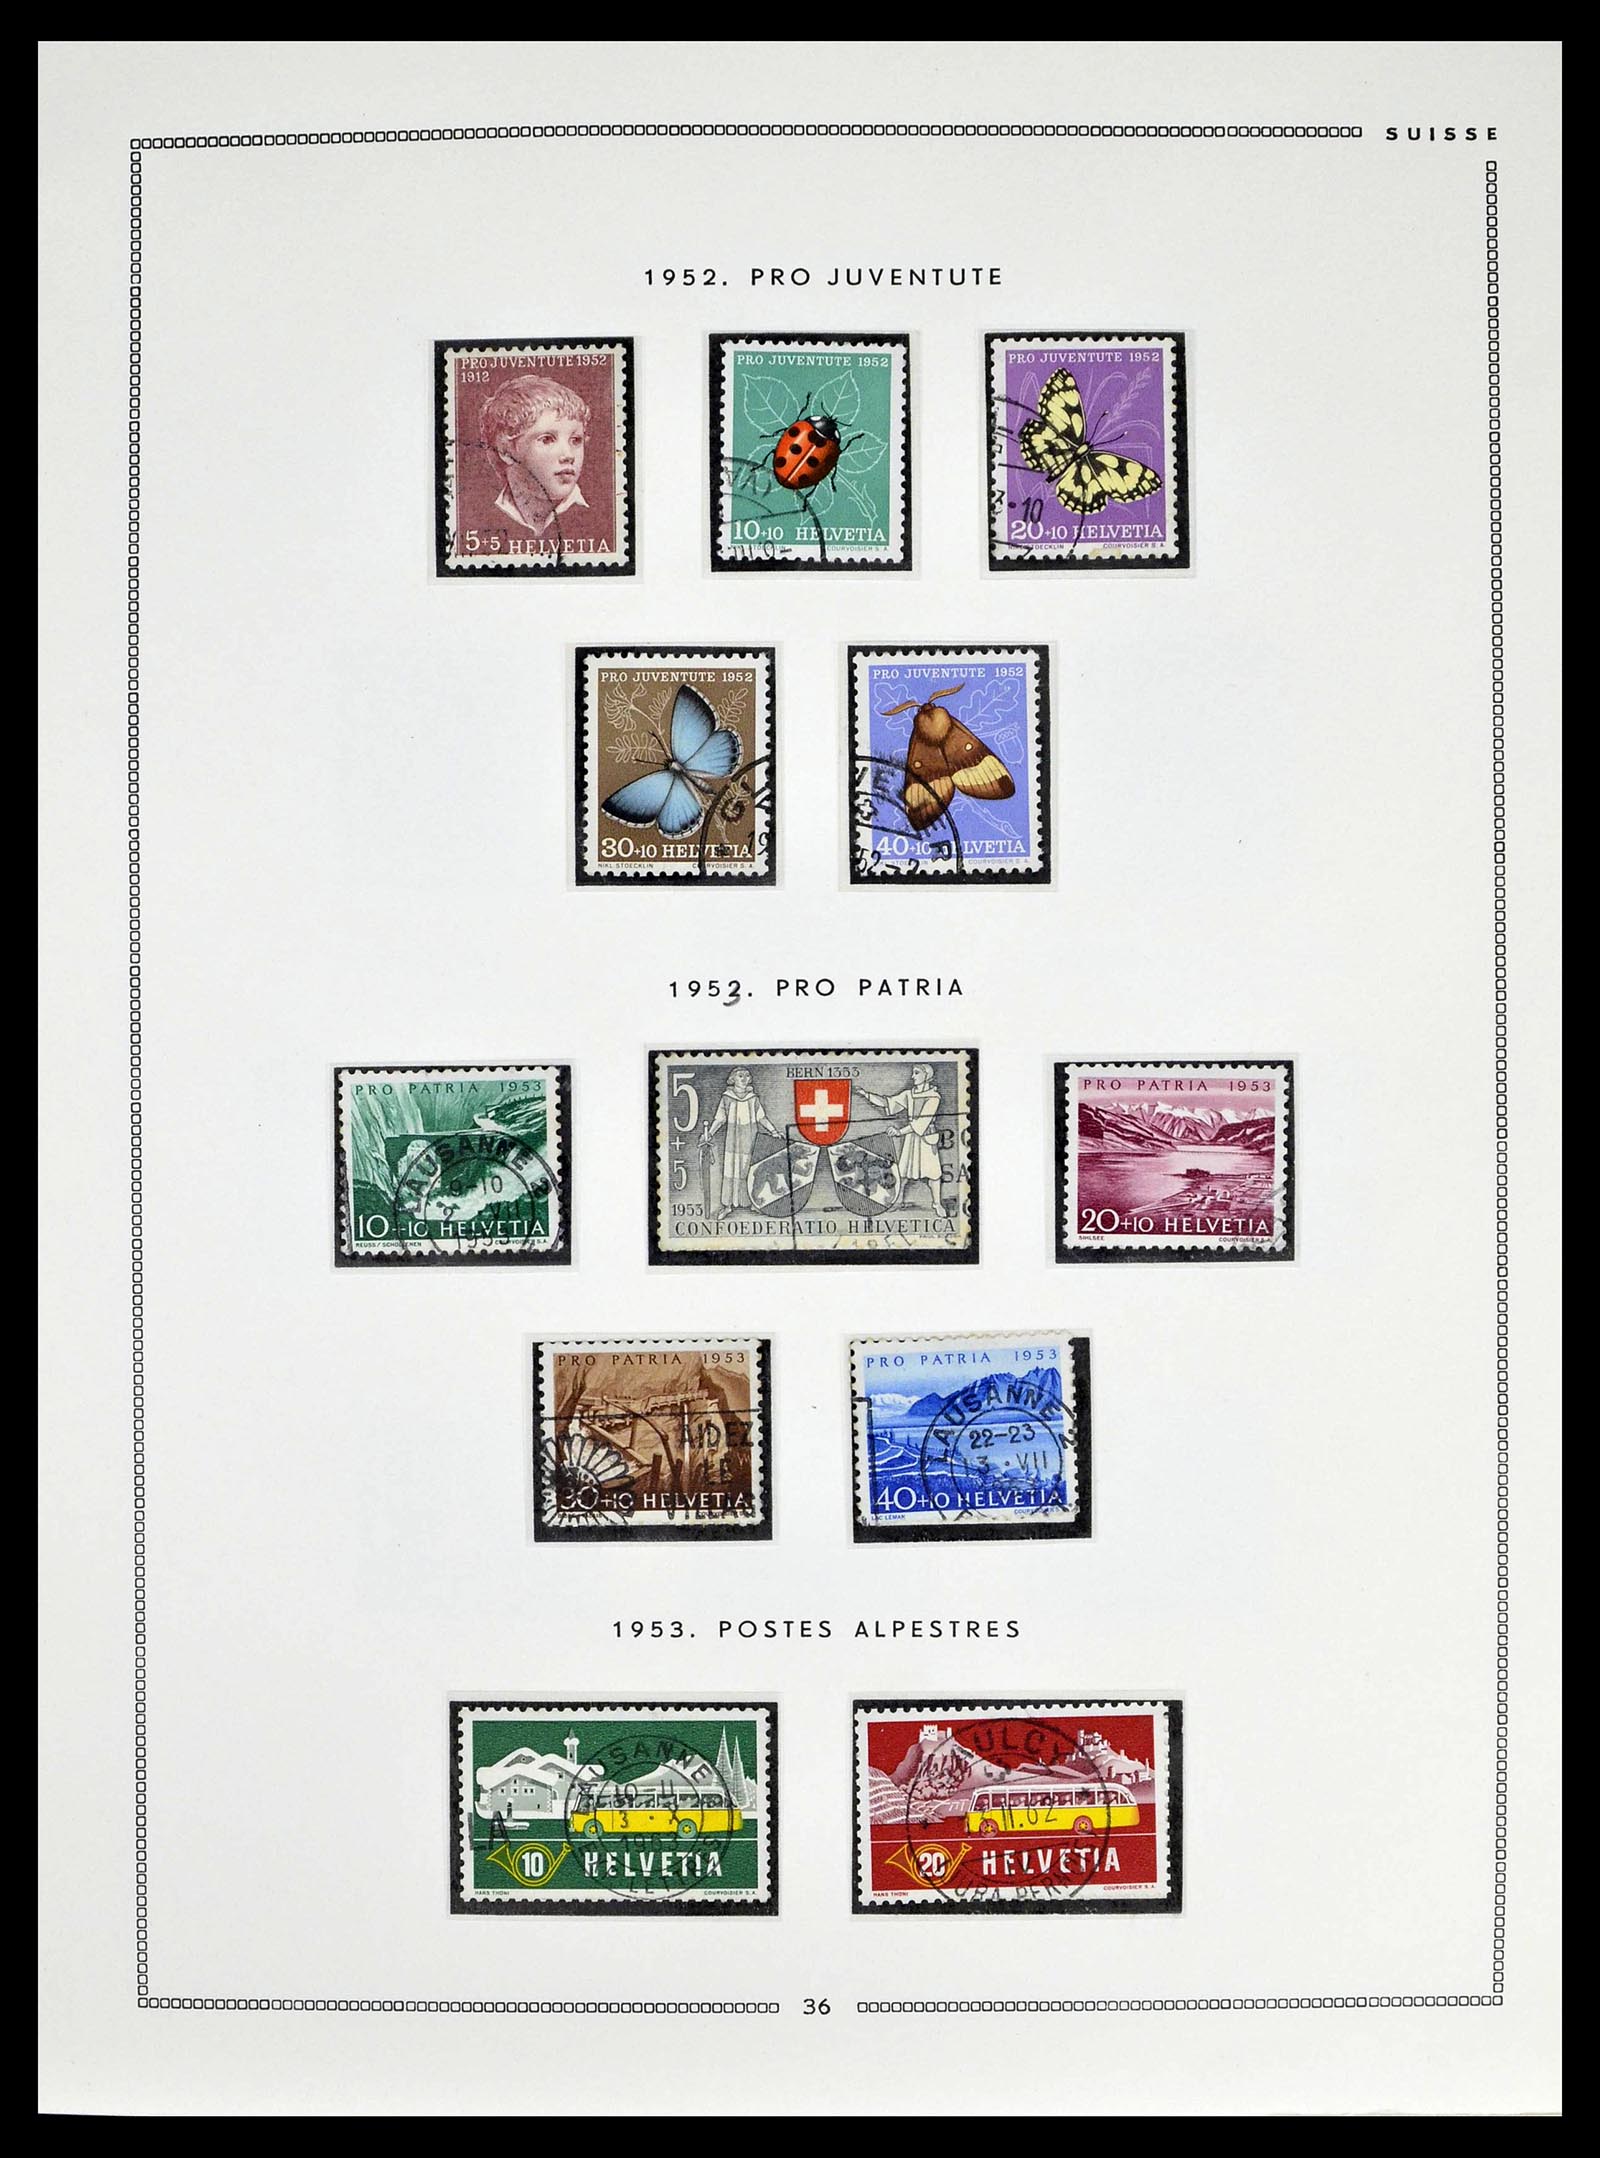 39094 0034 - Stamp collection 39094 Switzerland 1850-2005.